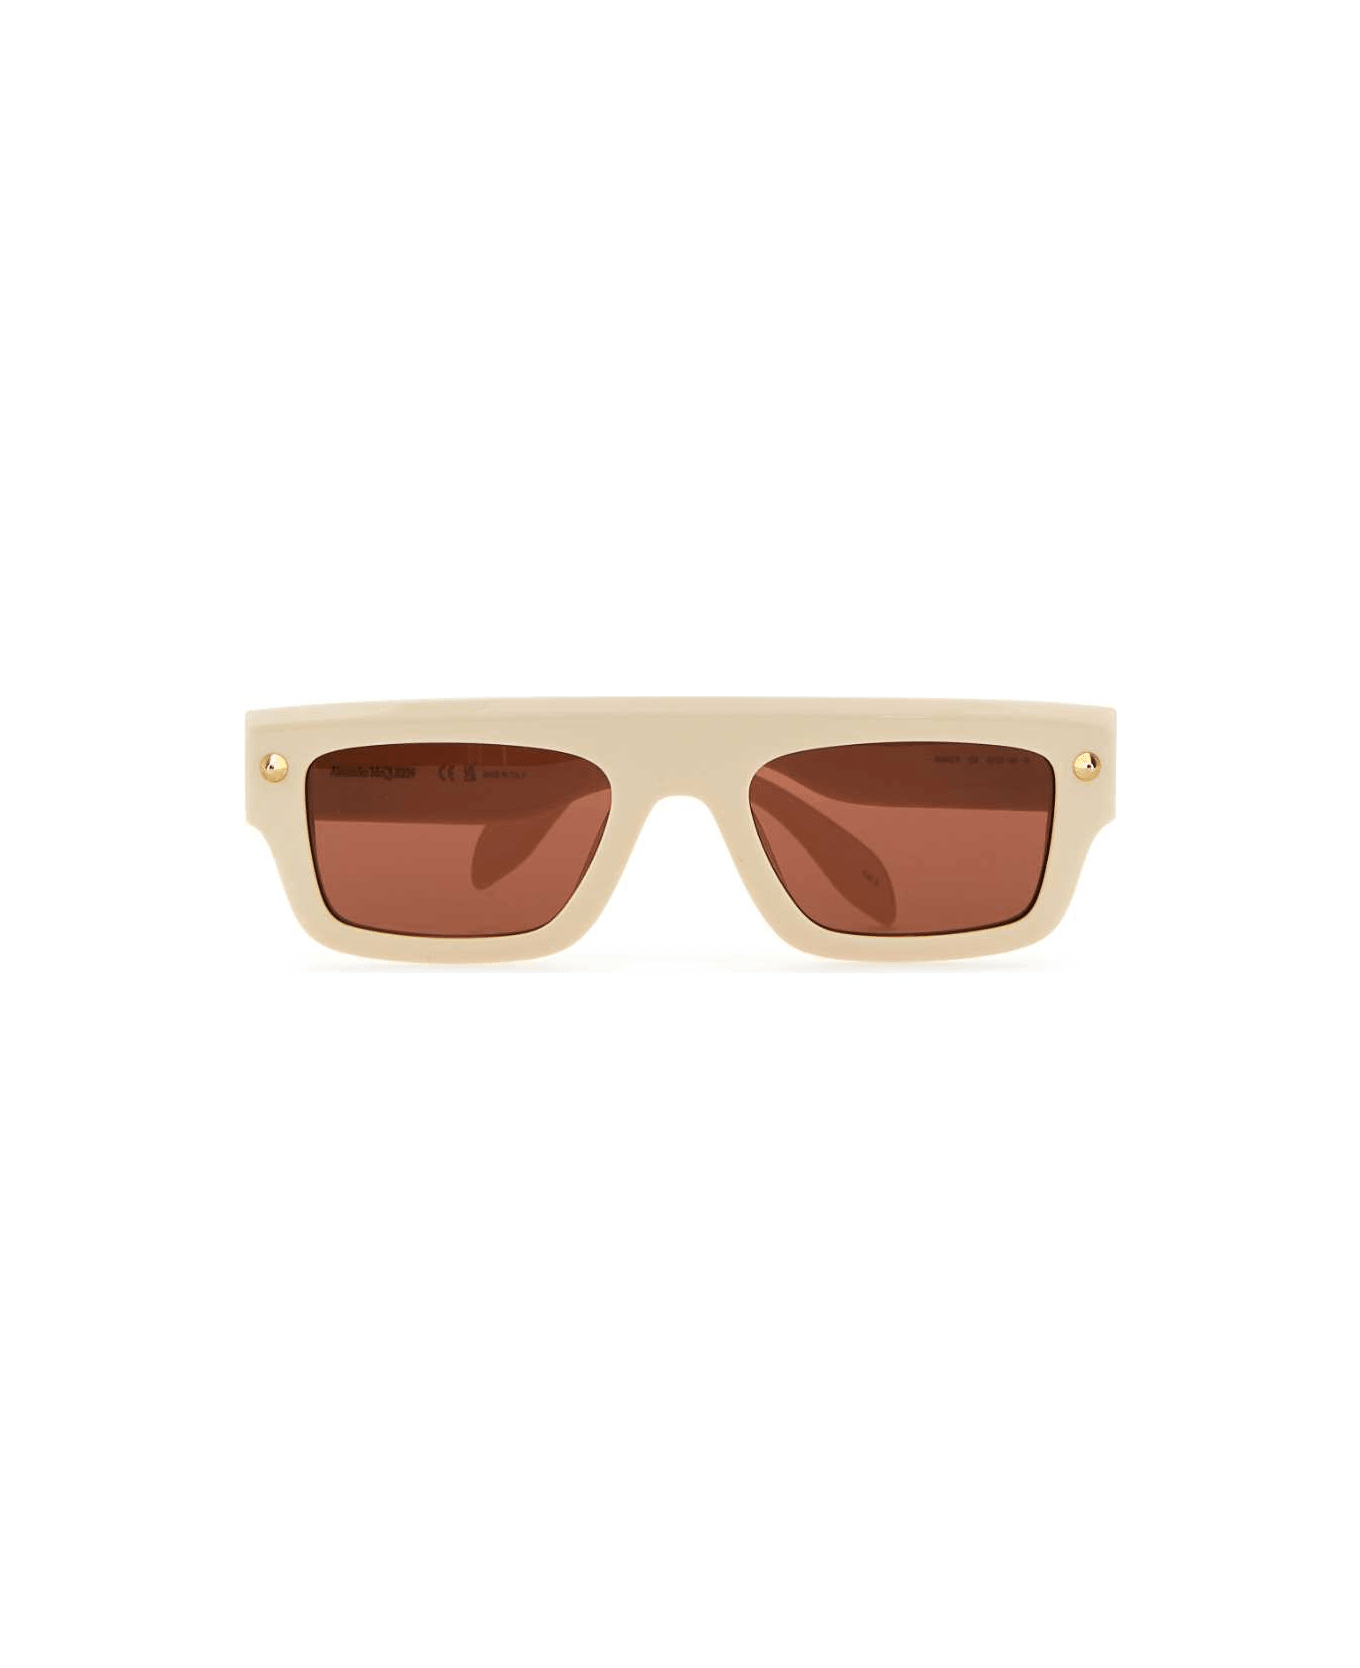 Alexander McQueen Ivory Acetate Sunglasses - IVORYIVORYBROWN サングラス